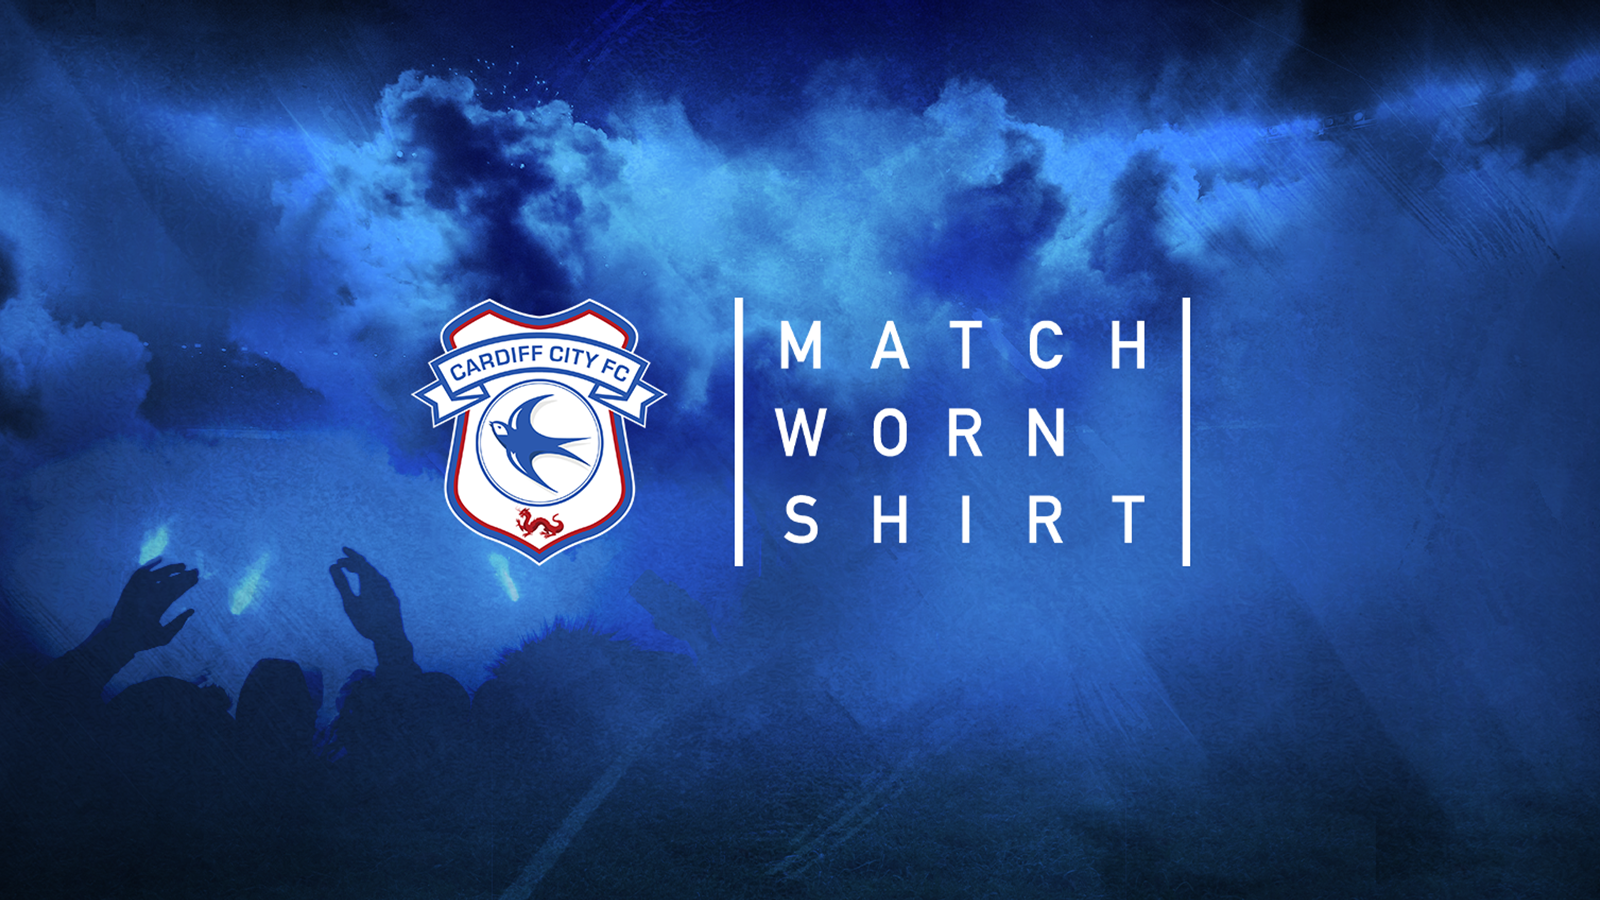 Cardiff City x MatchWornShirt